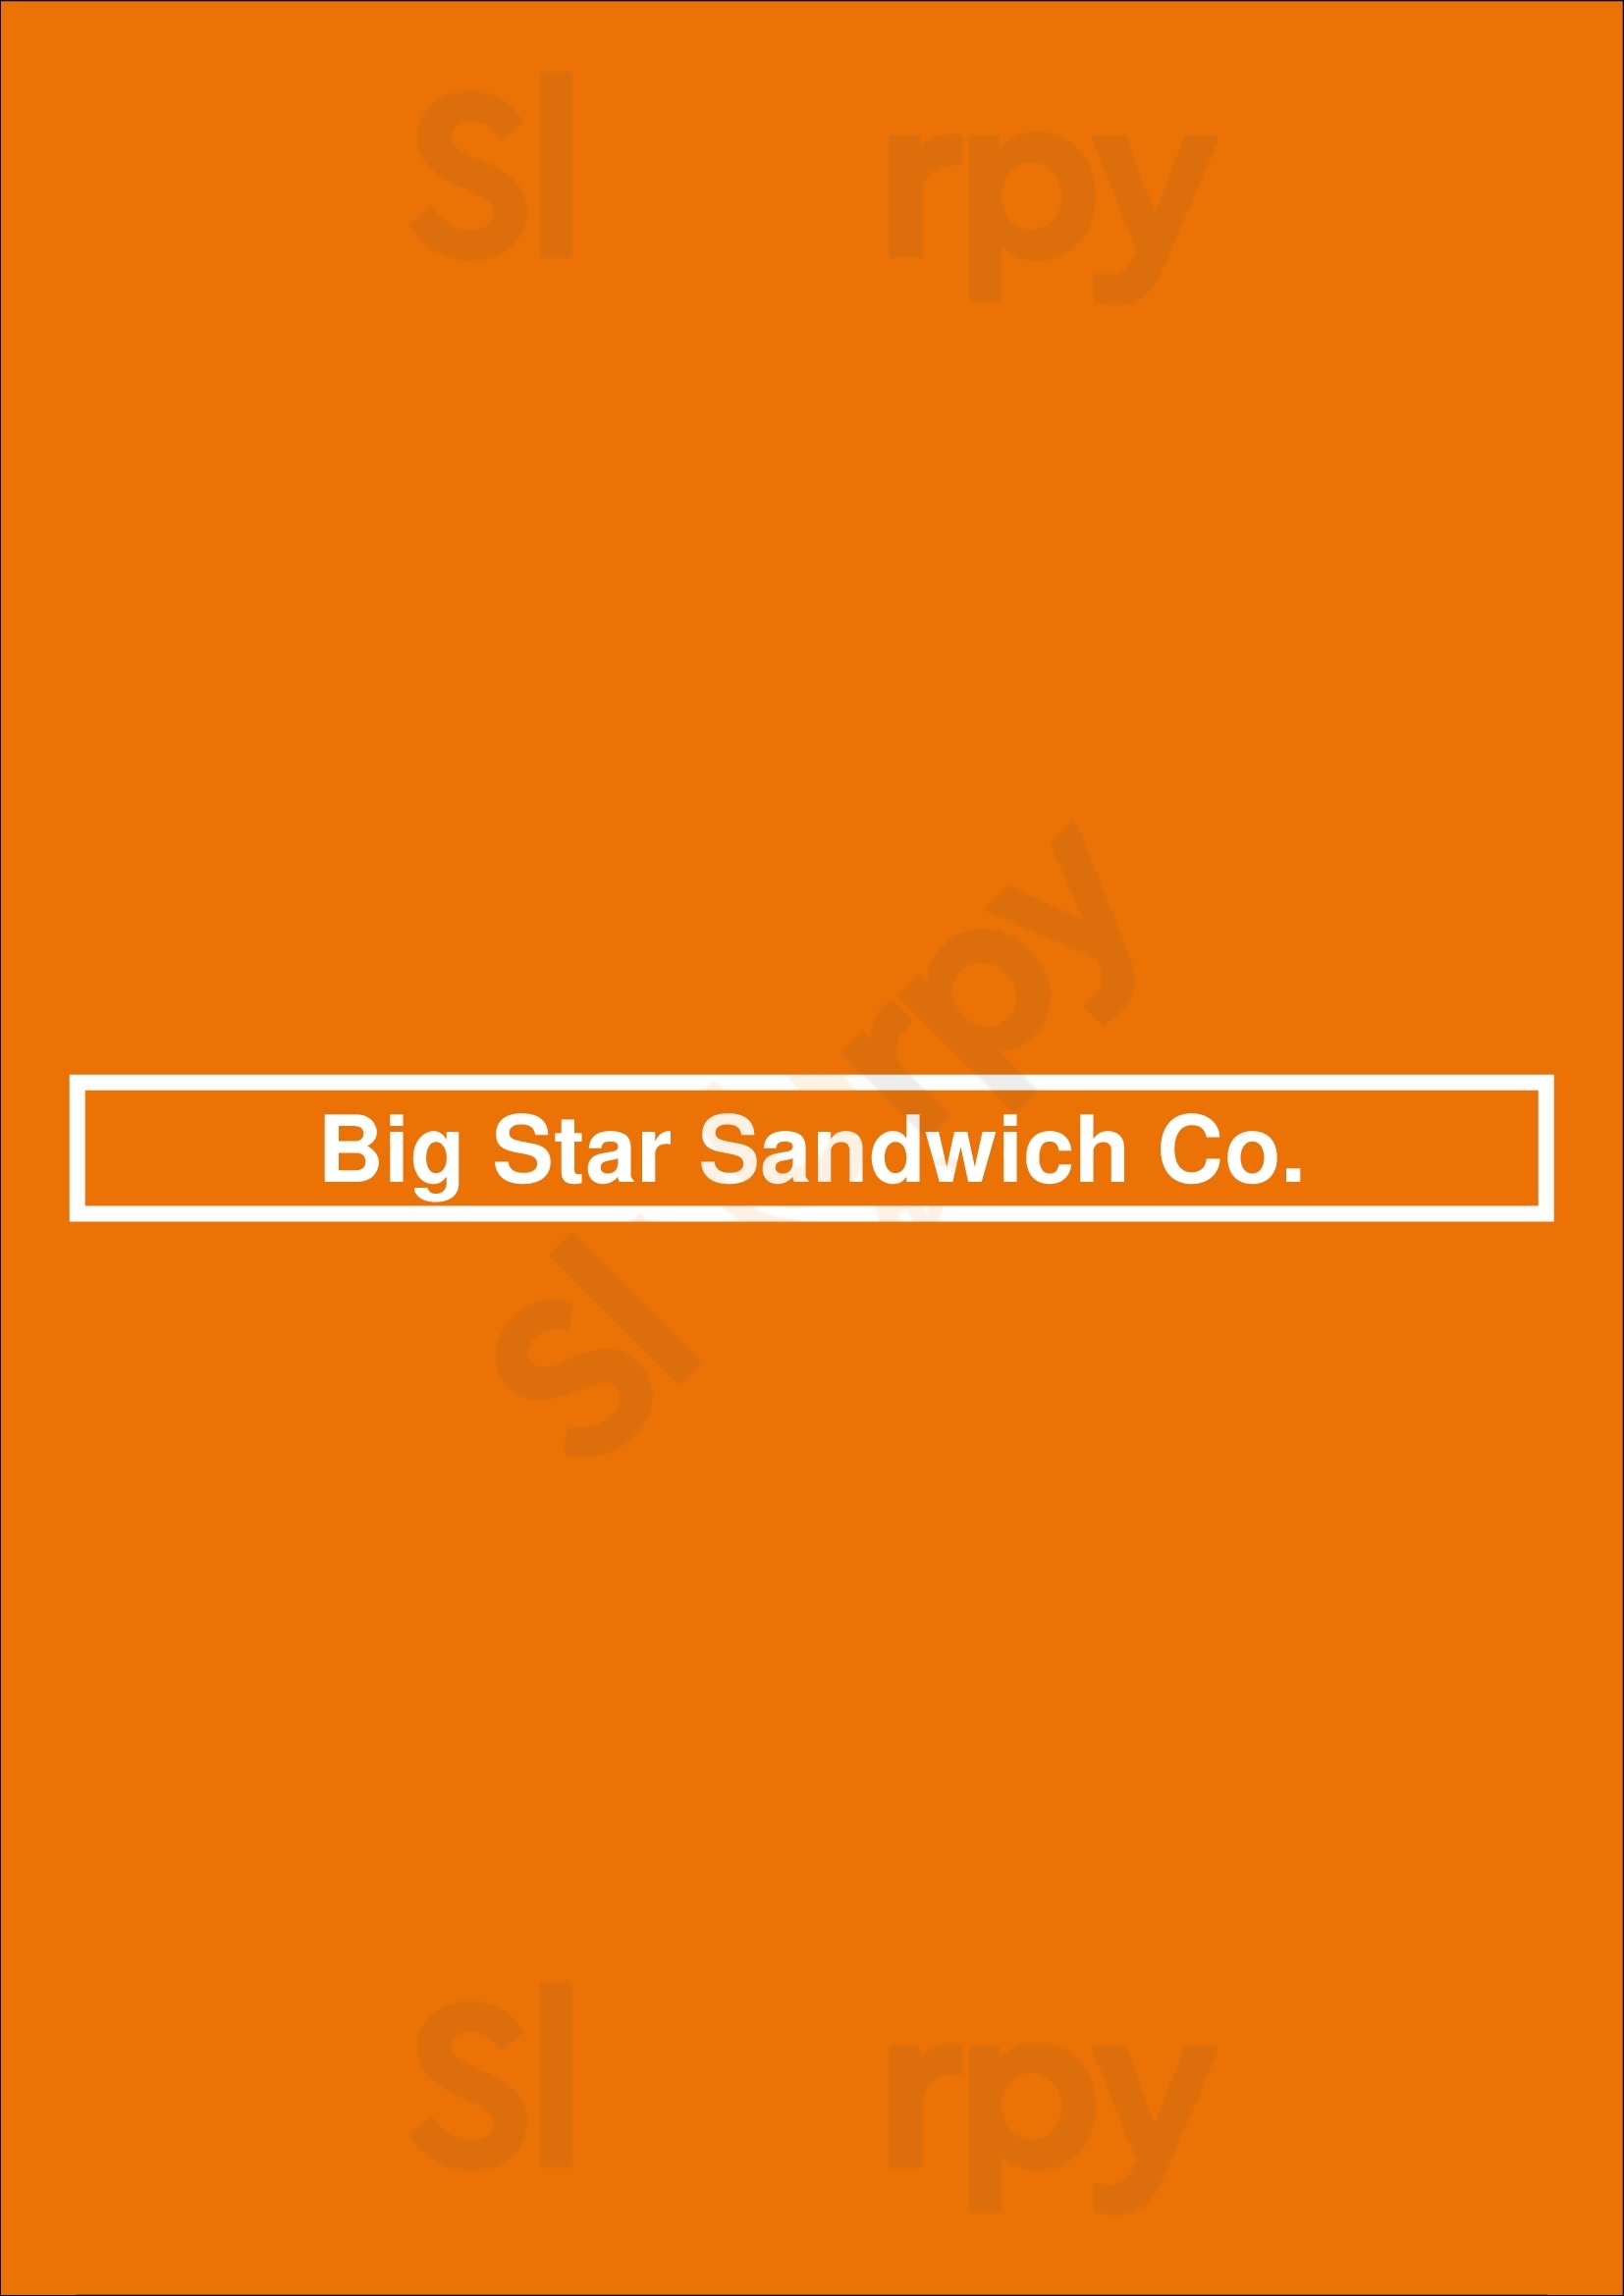 Big Star Sandwich Co. New Westminster Menu - 1